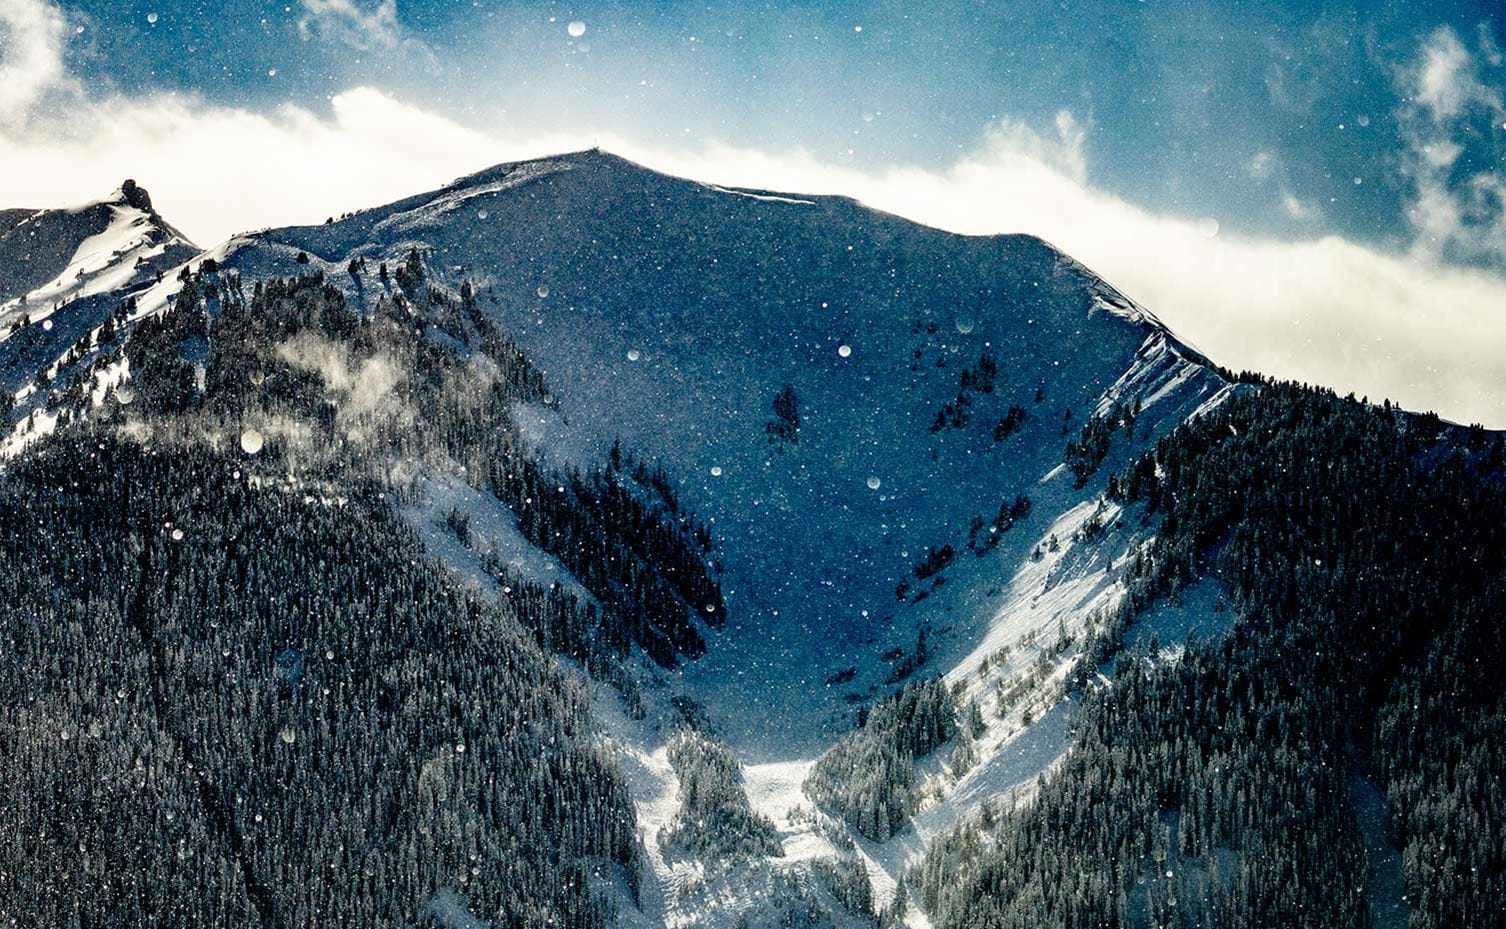 Aspen Highlands web cam